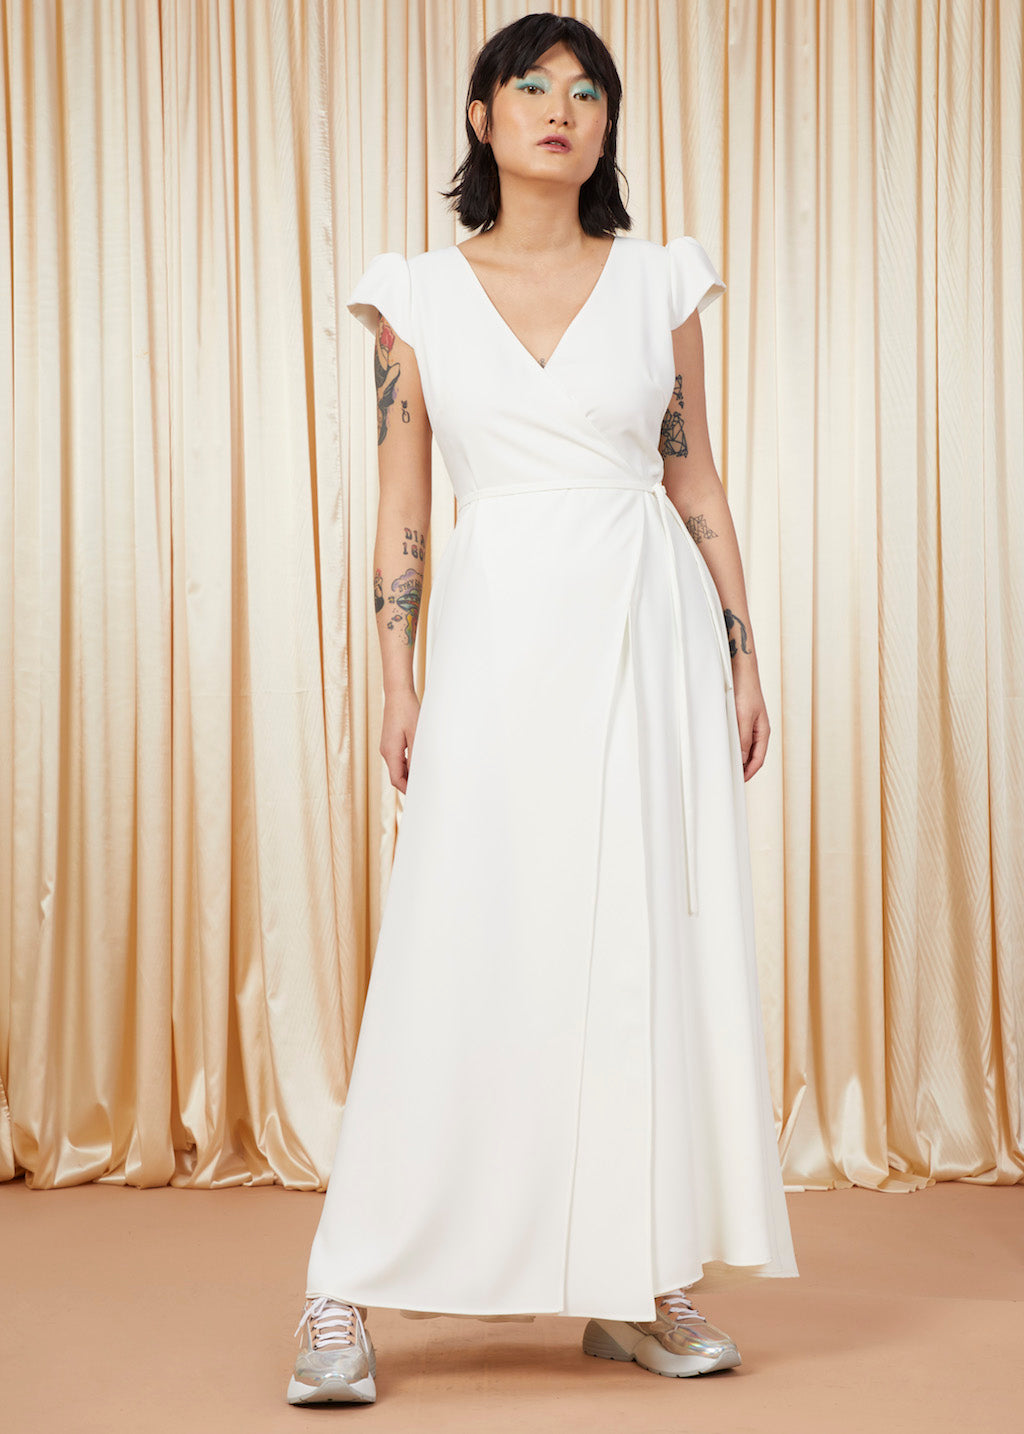 Femme Fatale | Wrap Wedding Gown